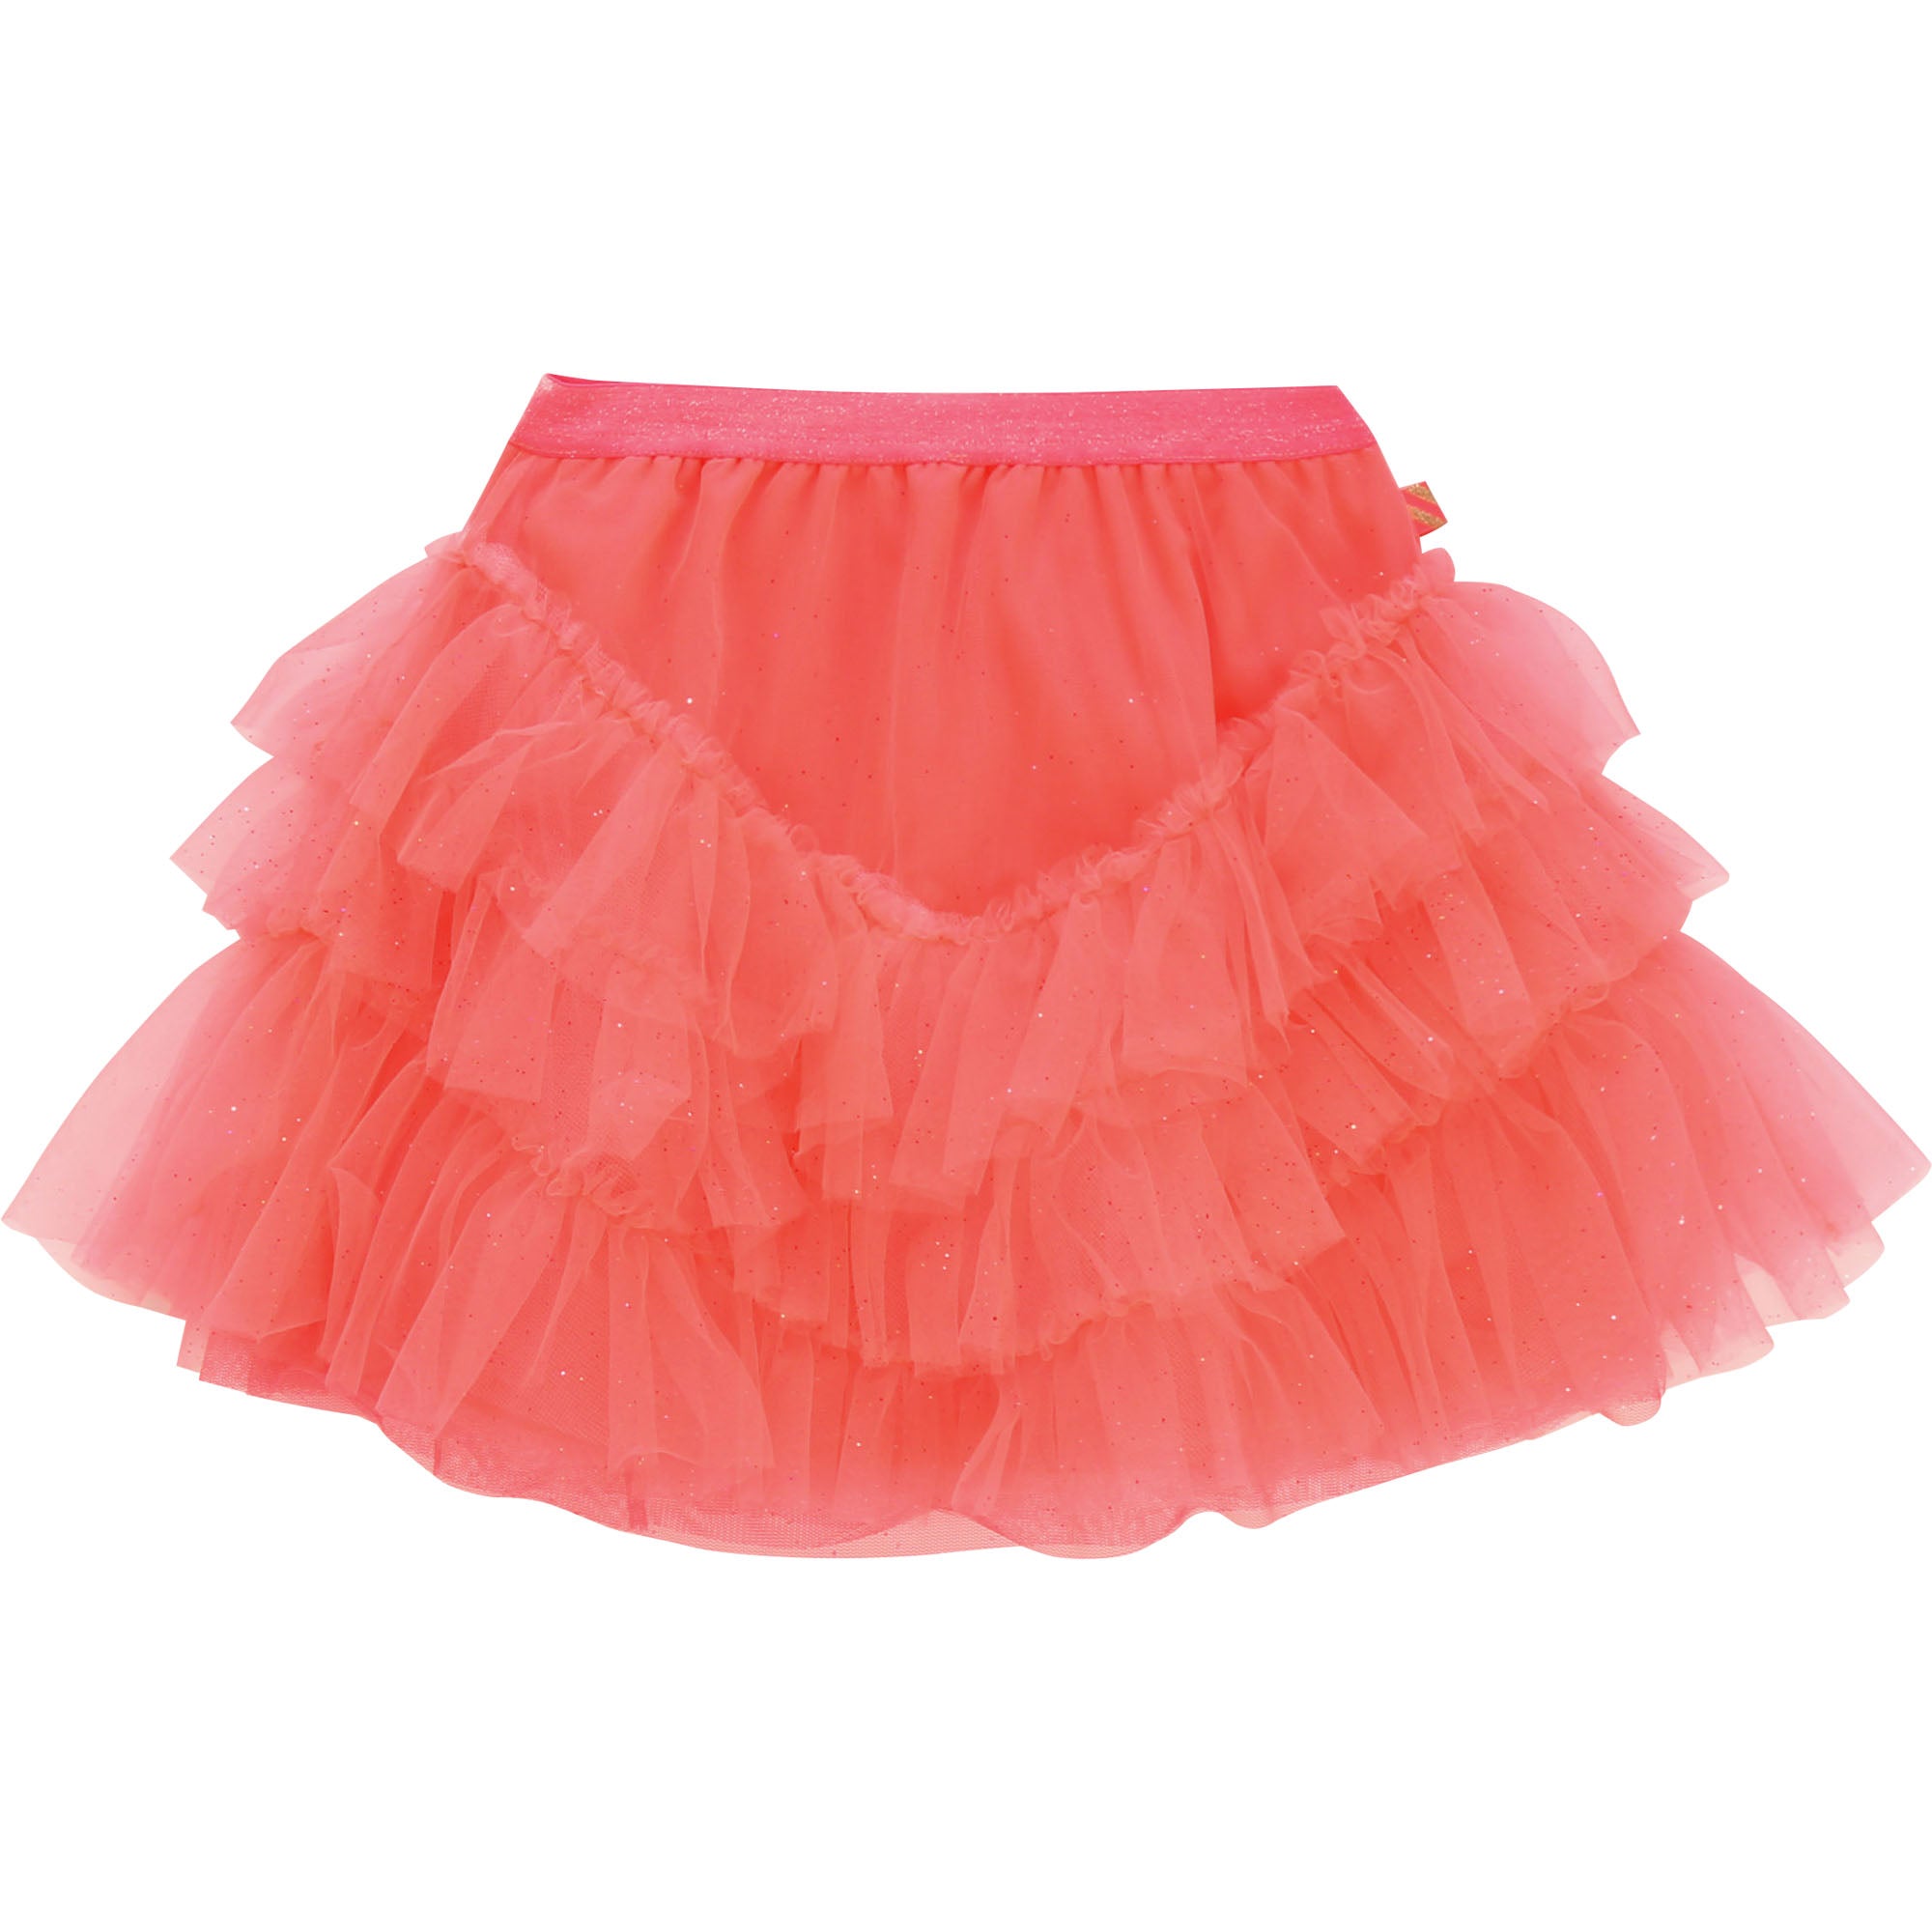 Girls Bright Pink Frill Tulle Skirt